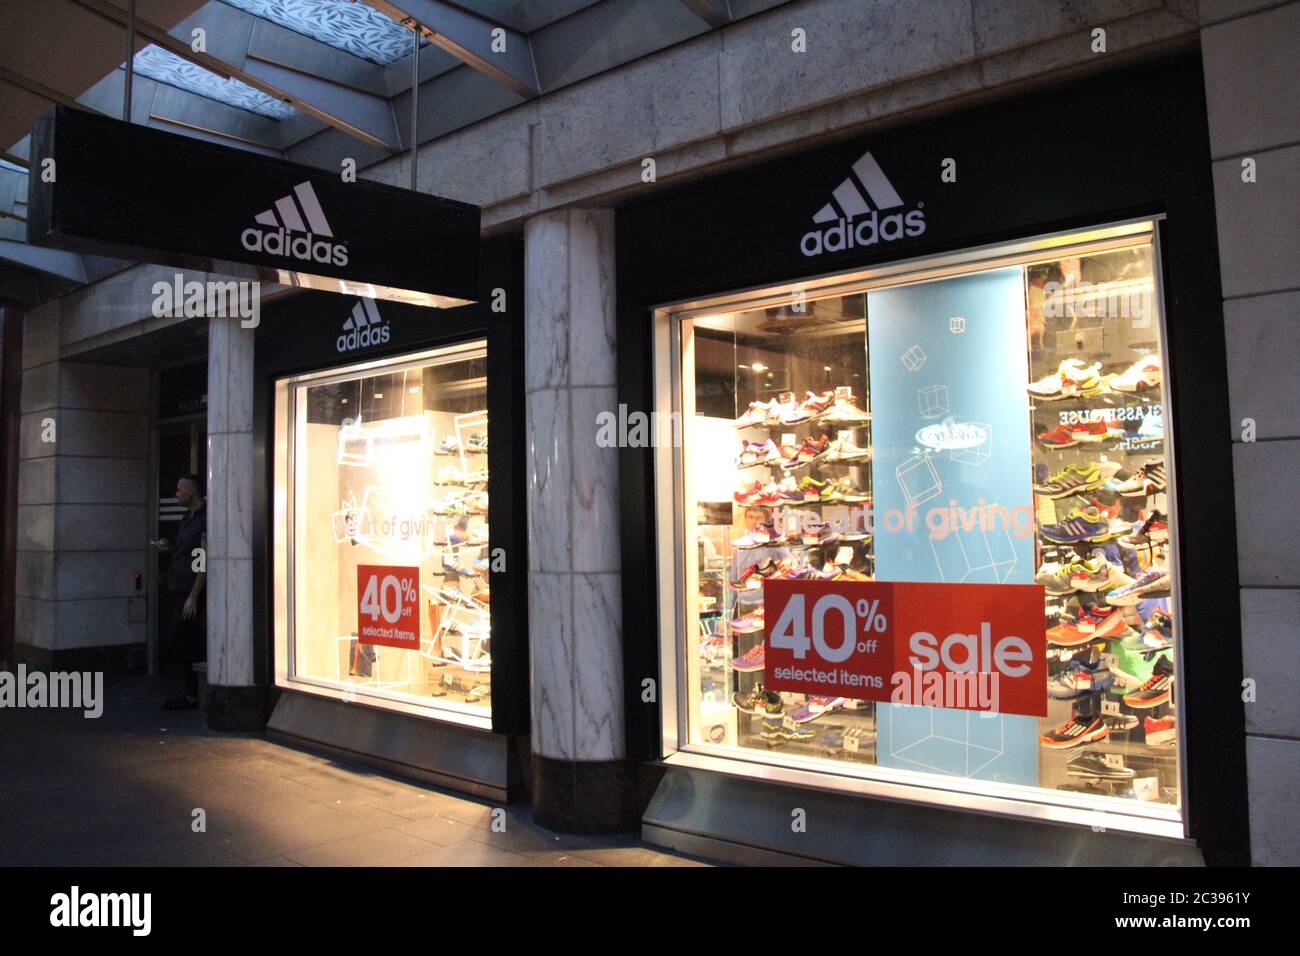 Sale at Adidas, Pitt Street Mall in Sydney, Australia Stock Photo - Alamy